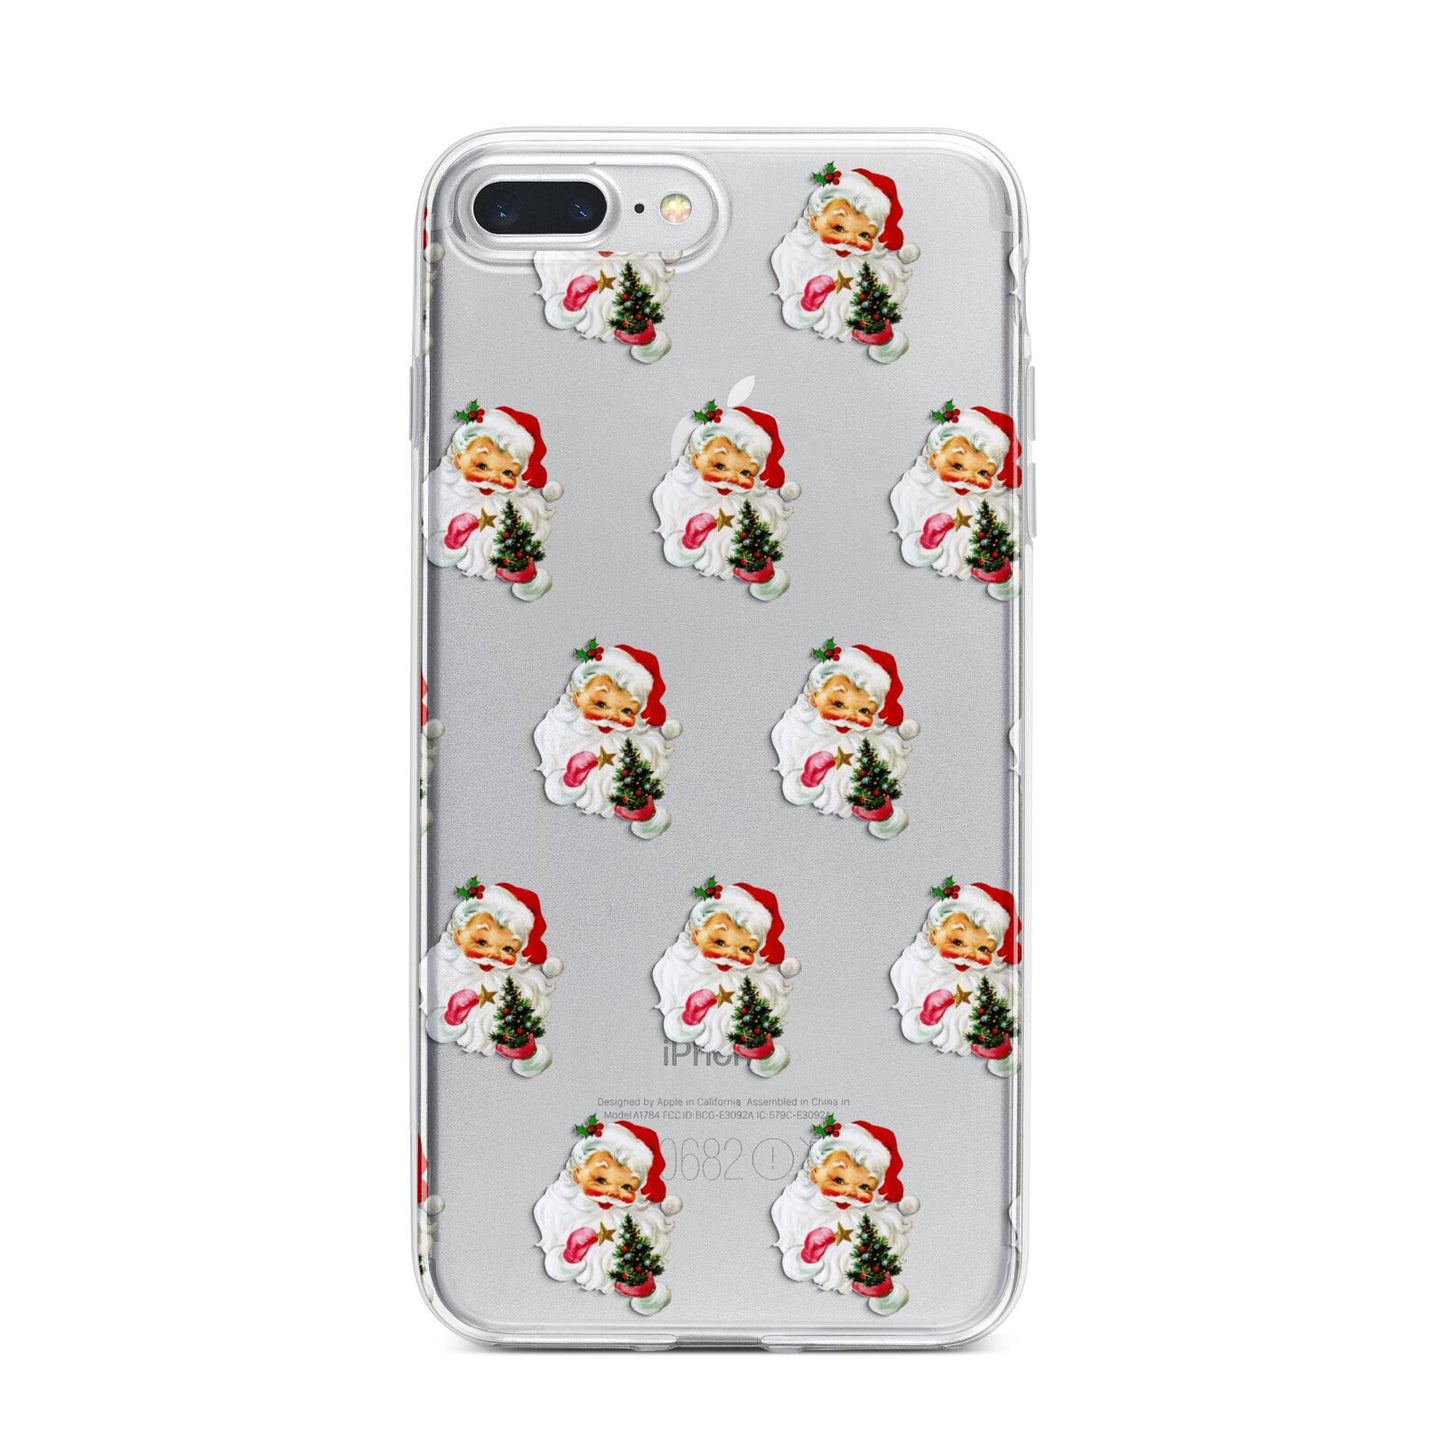 Retro Santa Face iPhone 7 Plus Bumper Case on Silver iPhone